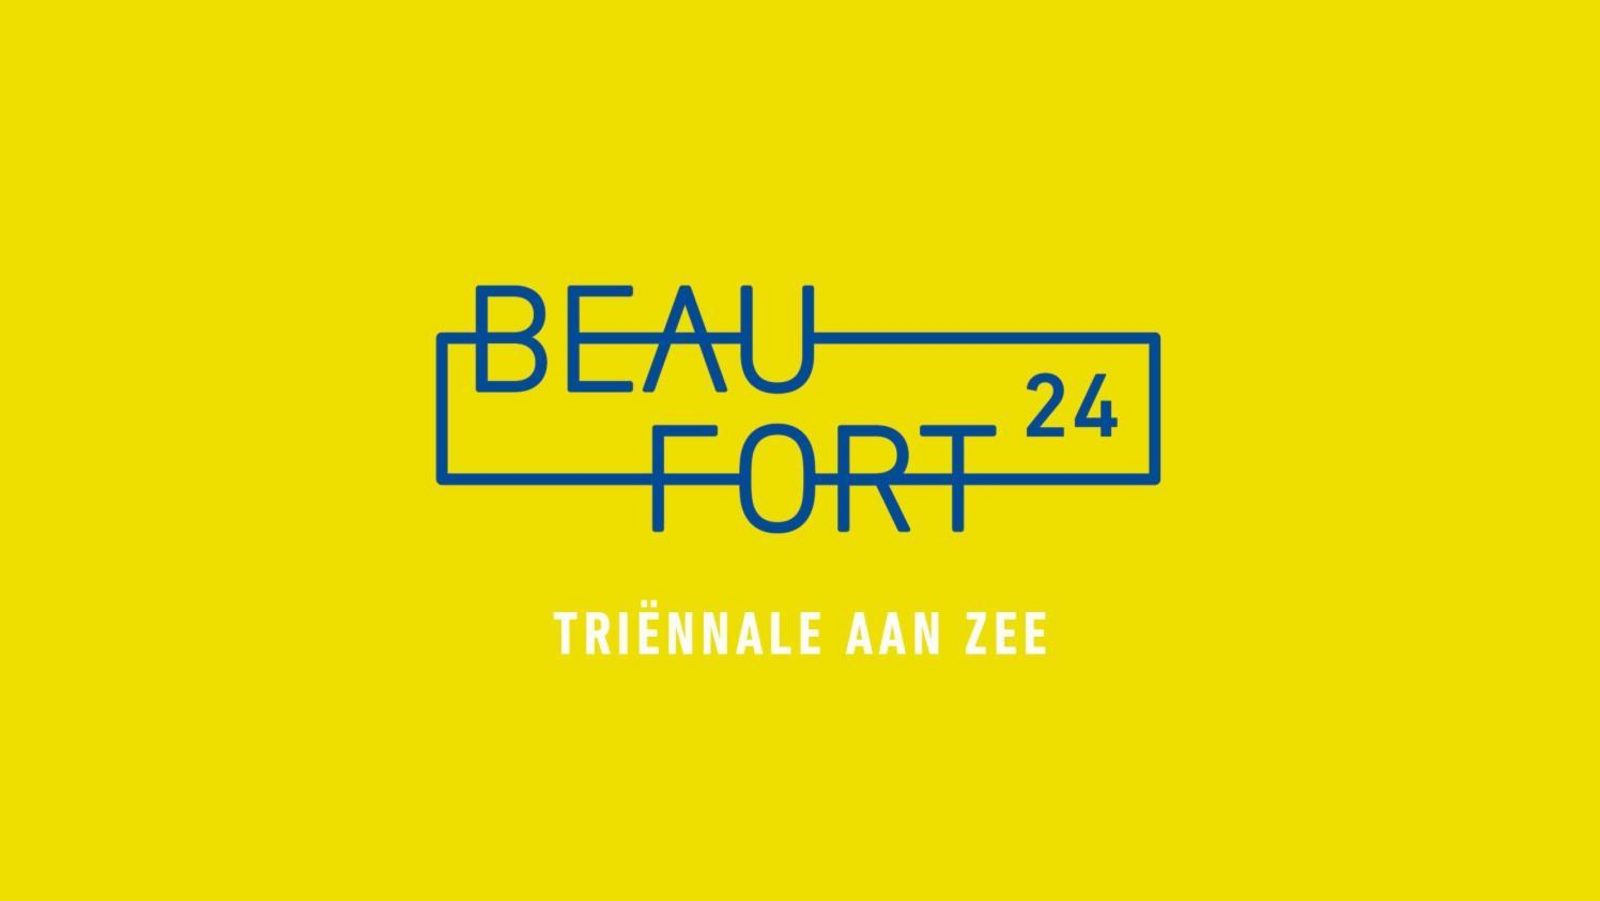 Beaufort 24